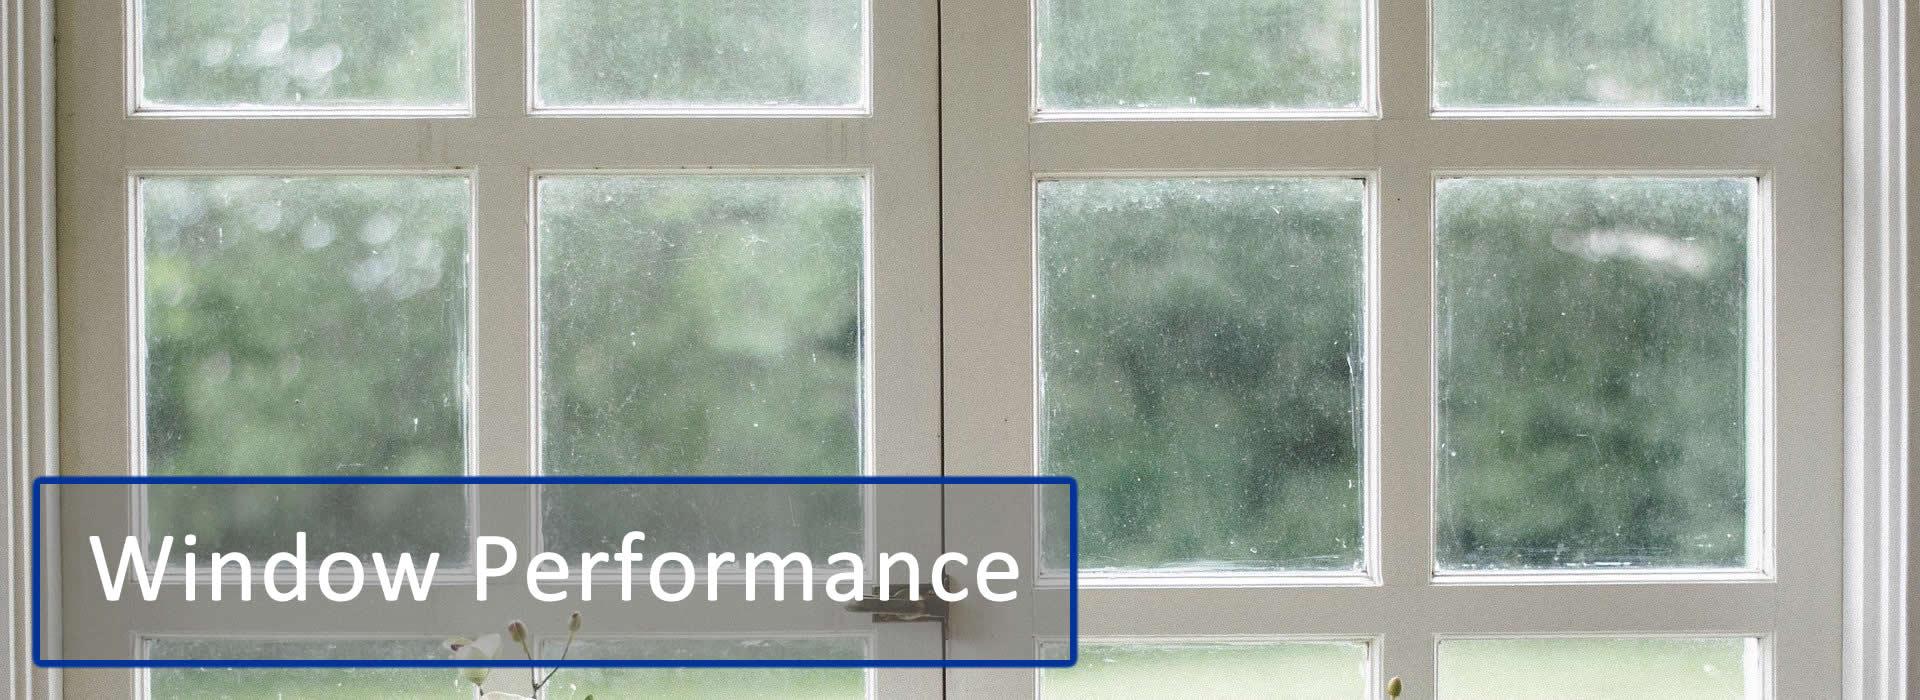 Window Performance